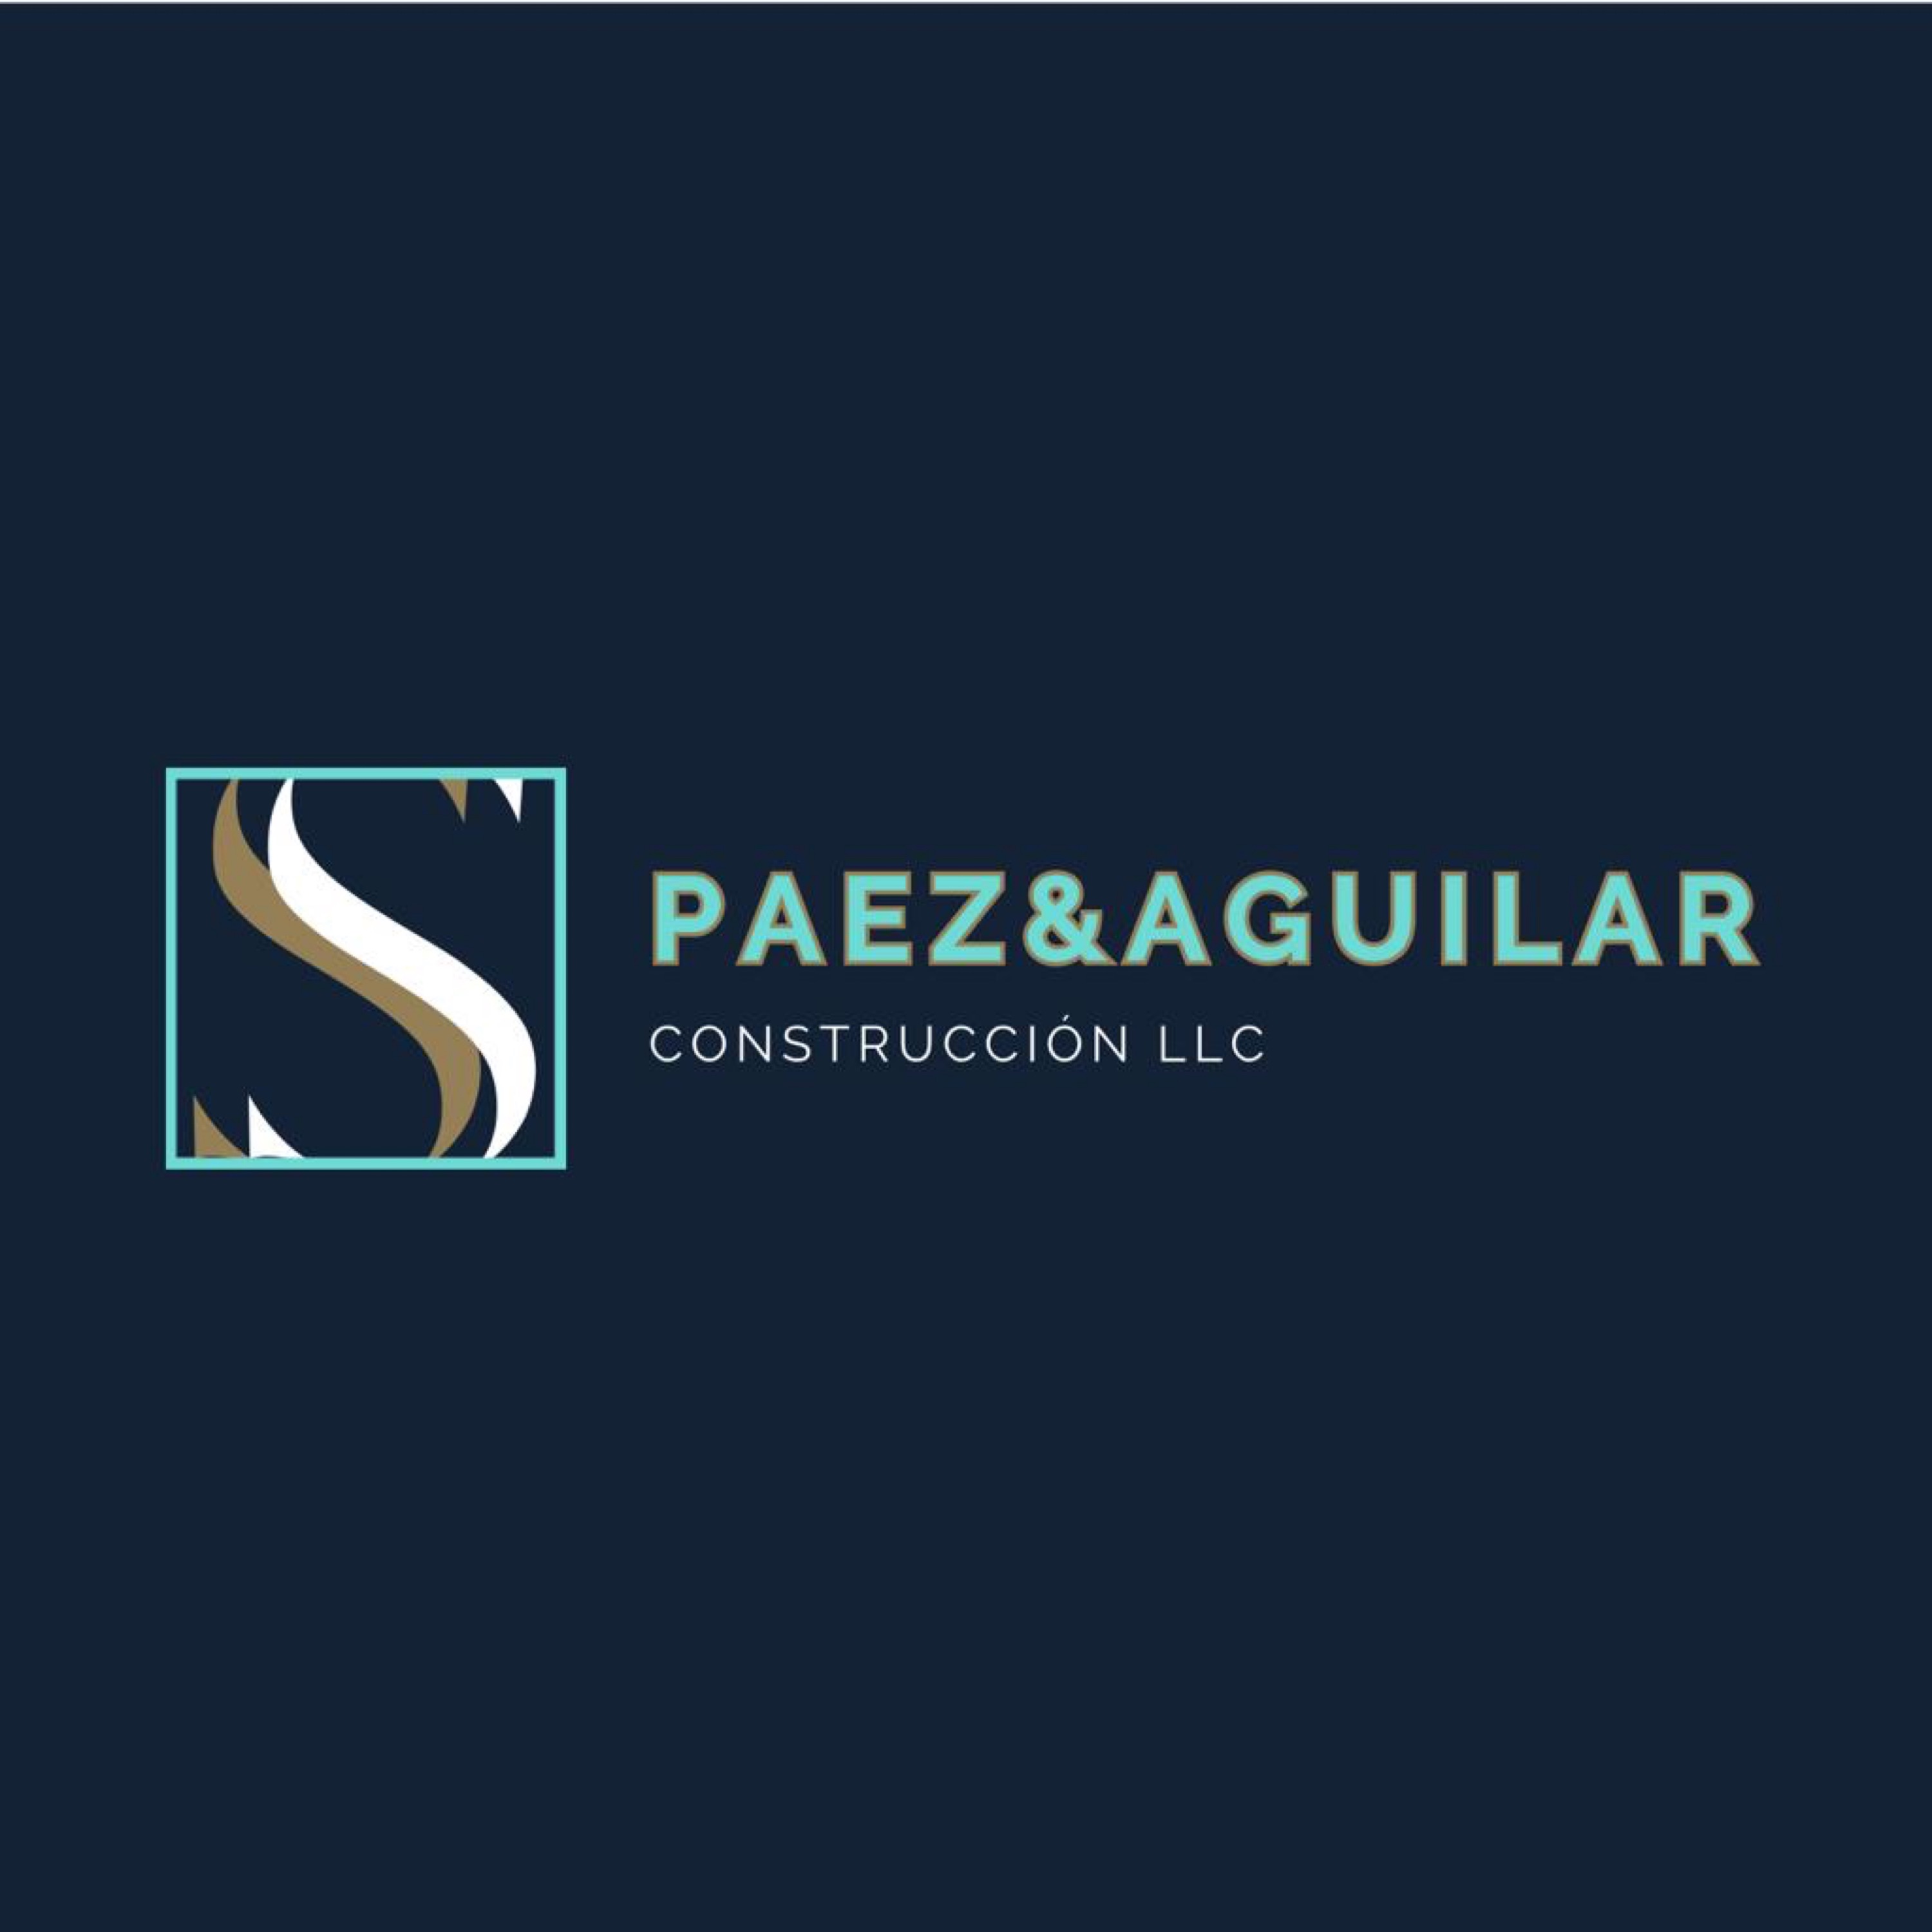 SS Paez & Aguilar Construction LLC Logo